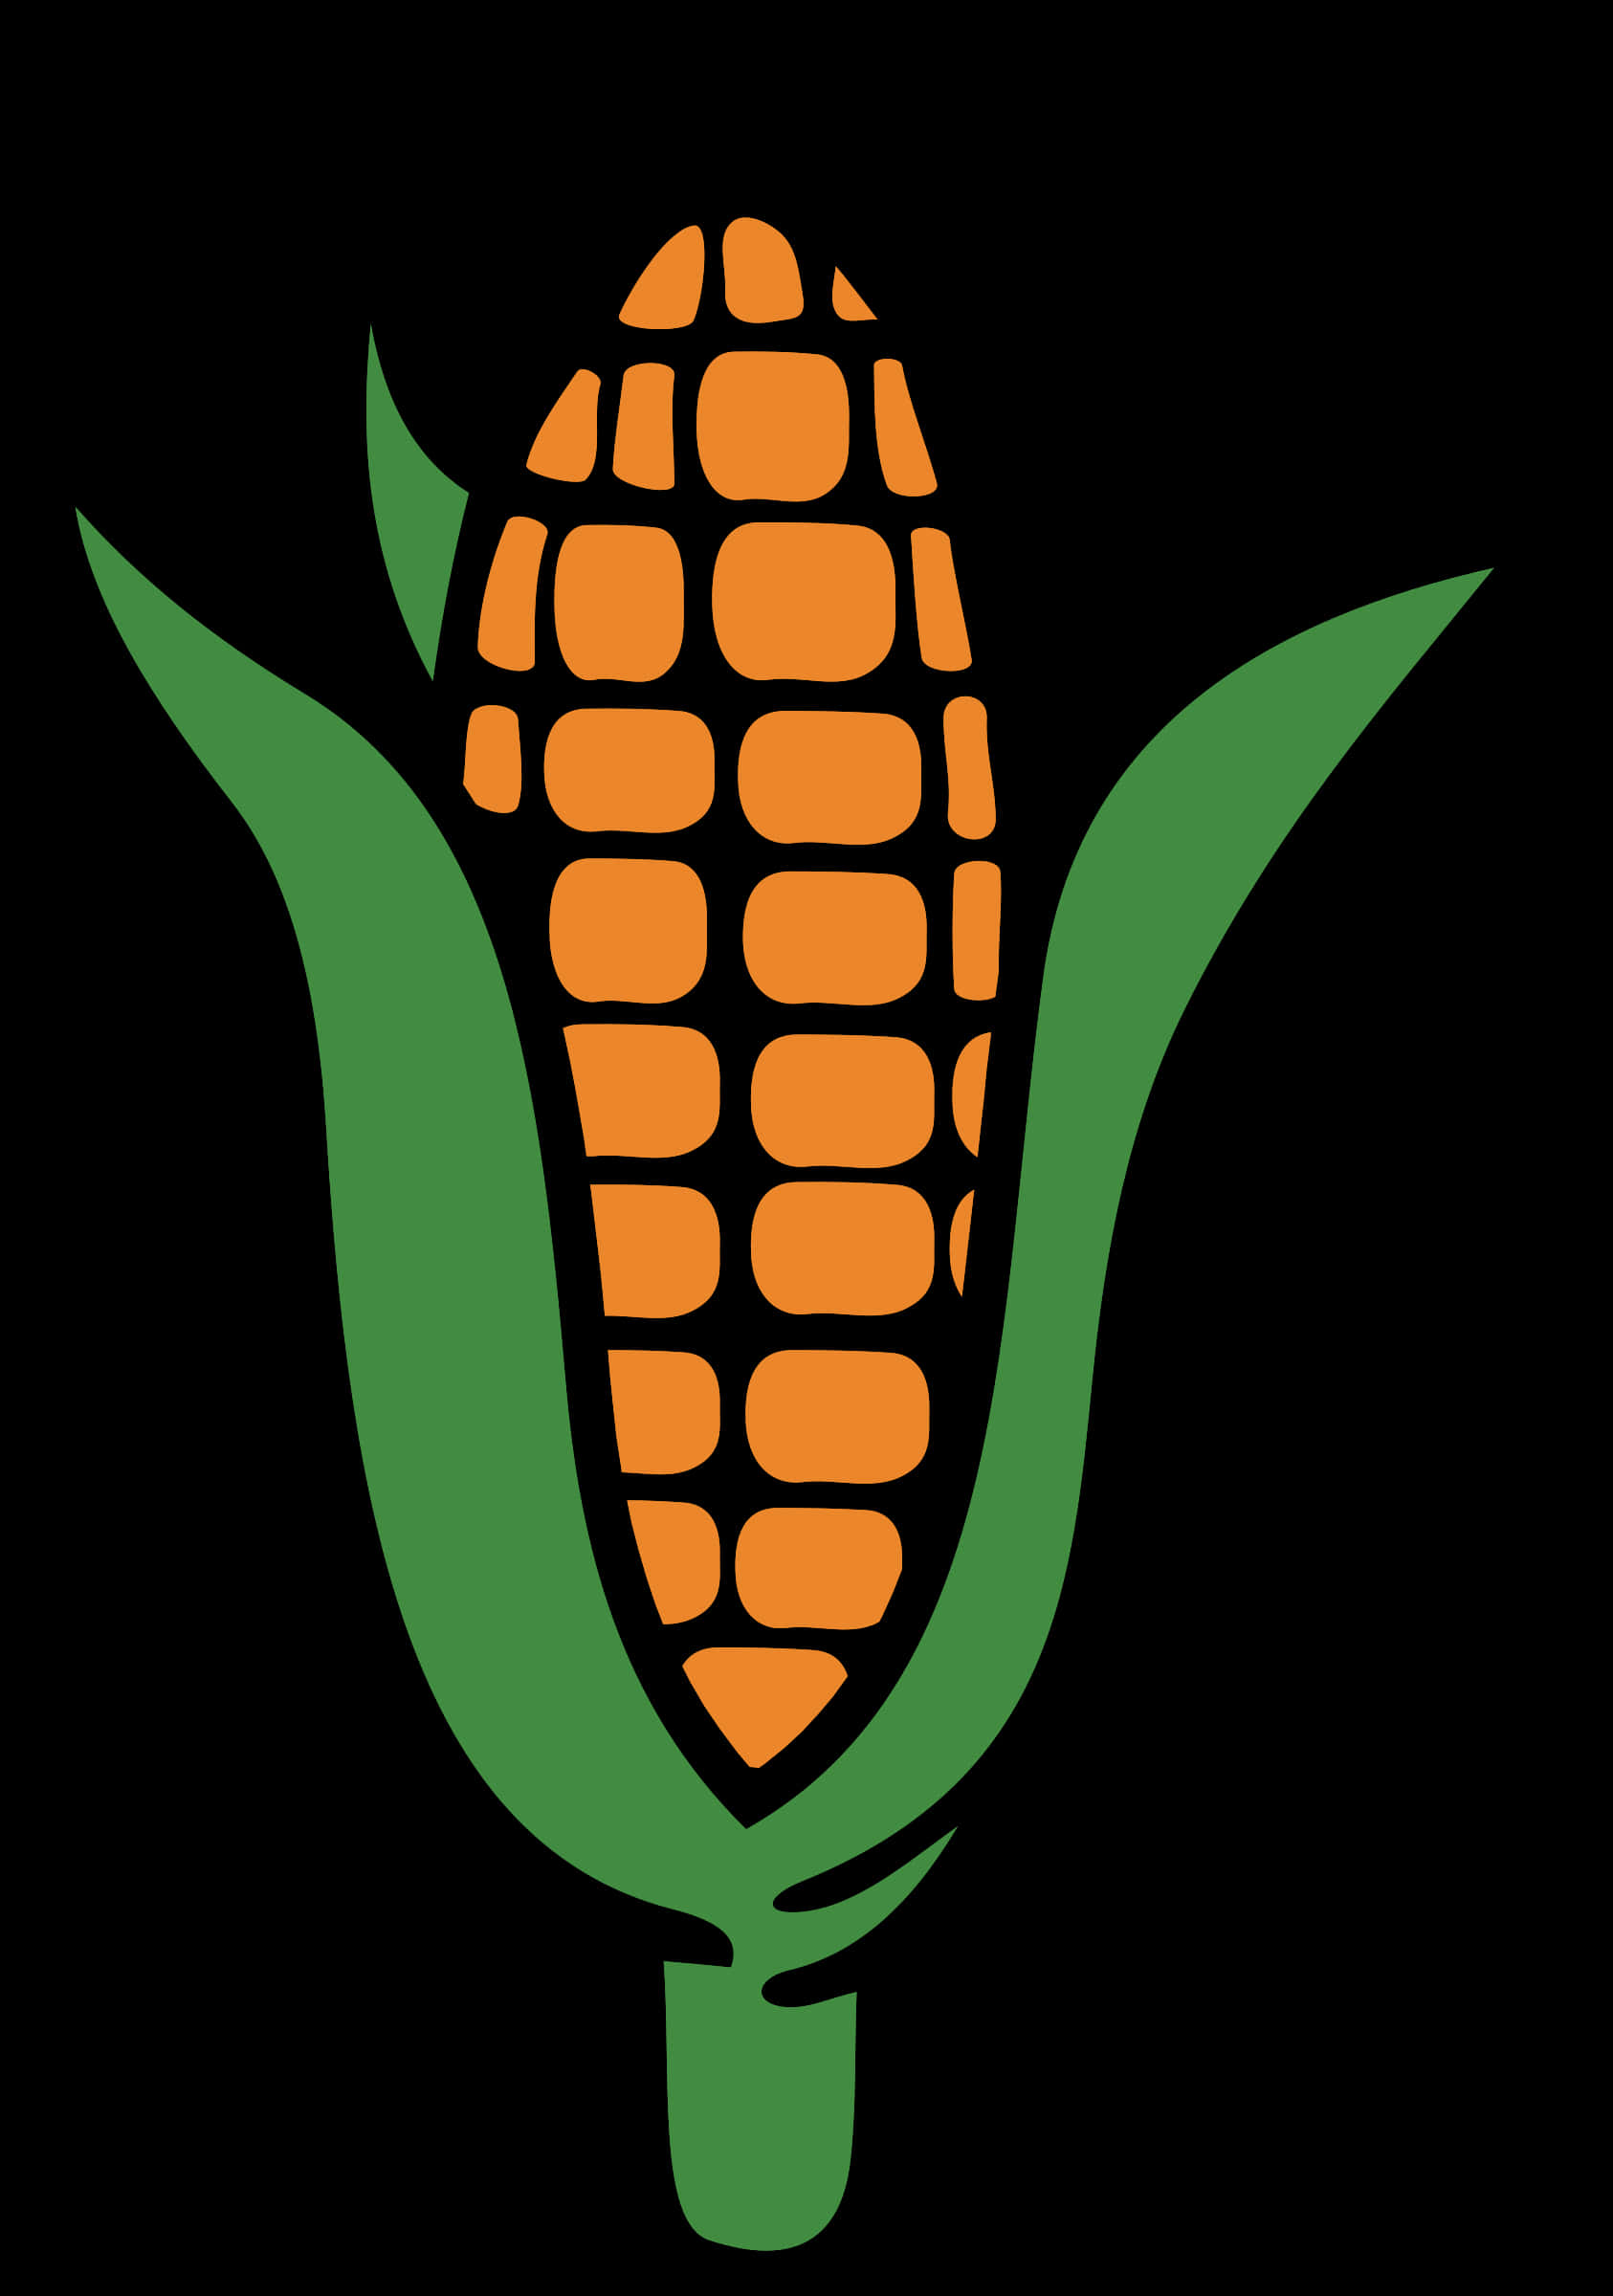 Stylized Corn Illustration PNG